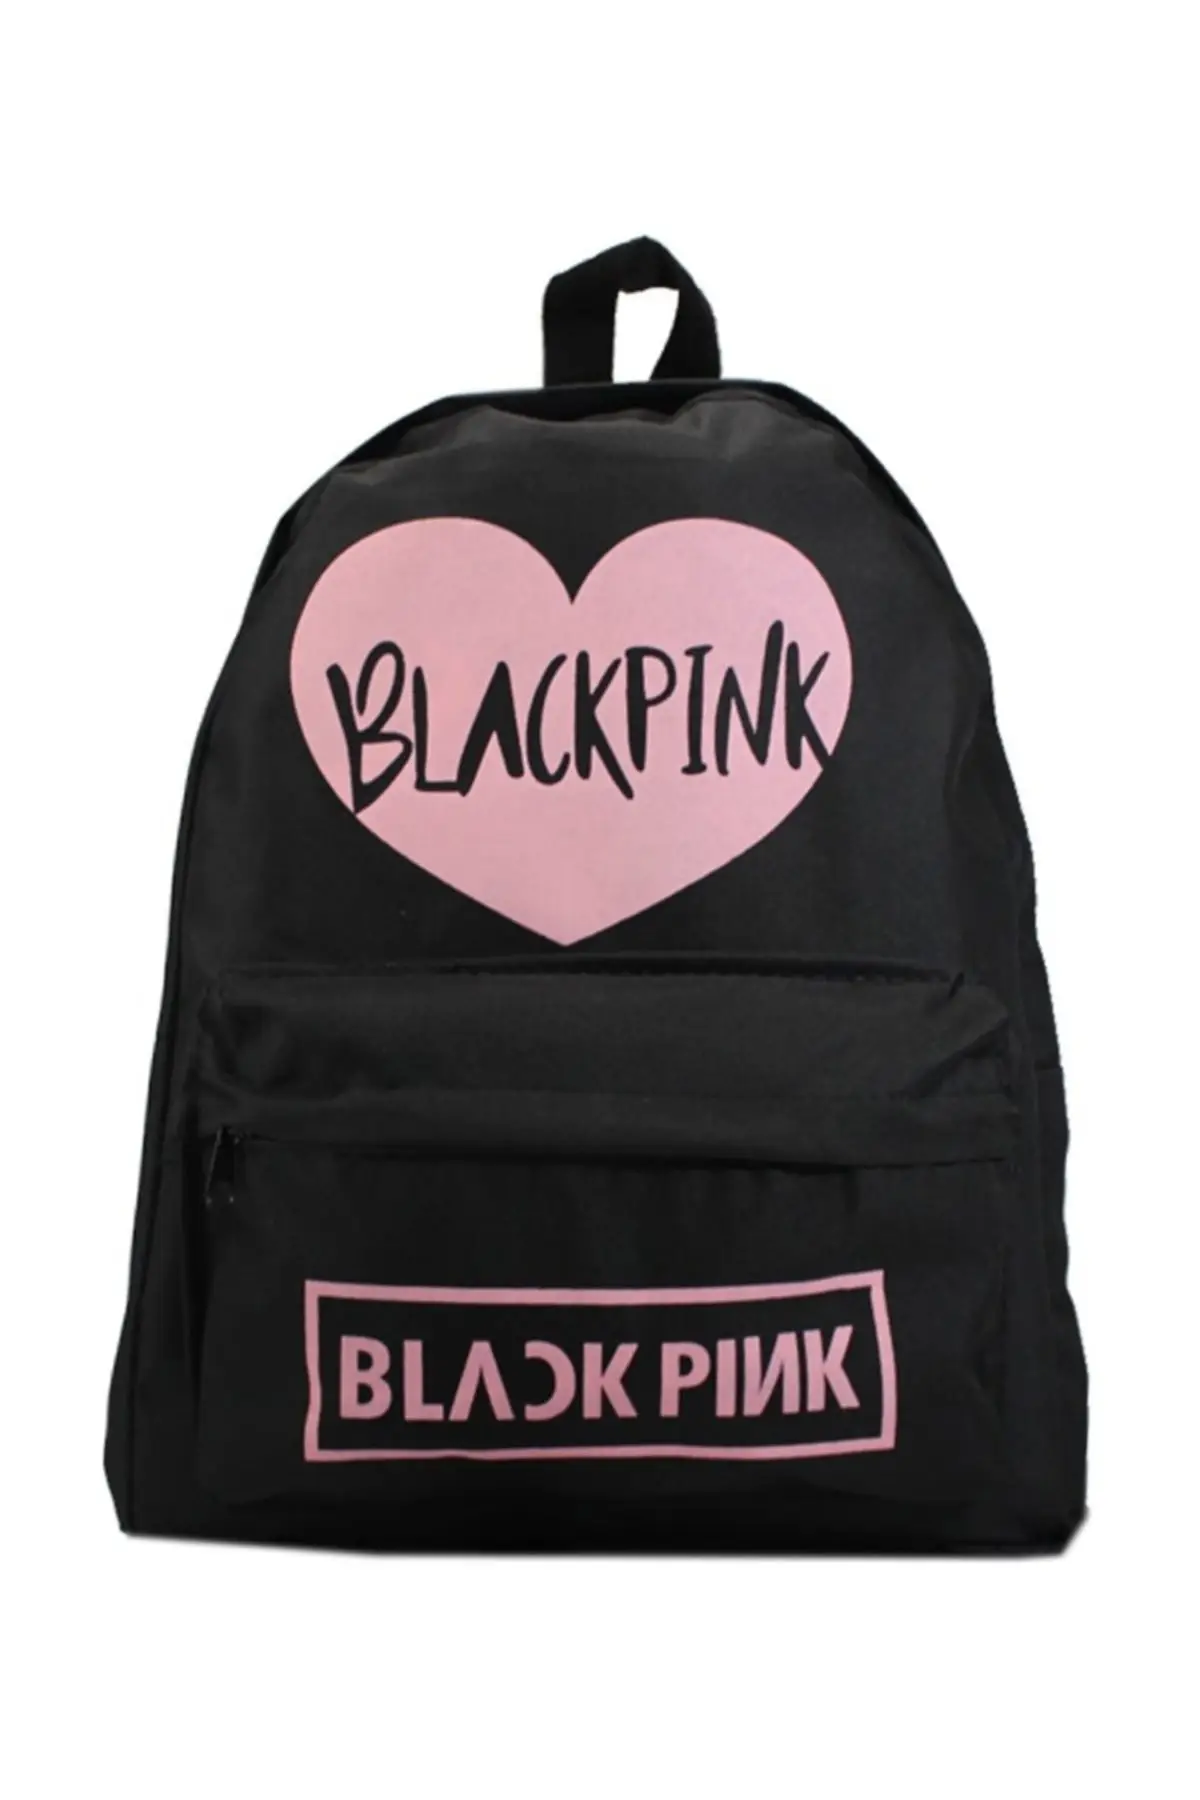 

Blackpink Kpop Heart Backpack School Bag Blackpink Clothes Jennie Lisa Rose Jisoo K-pop